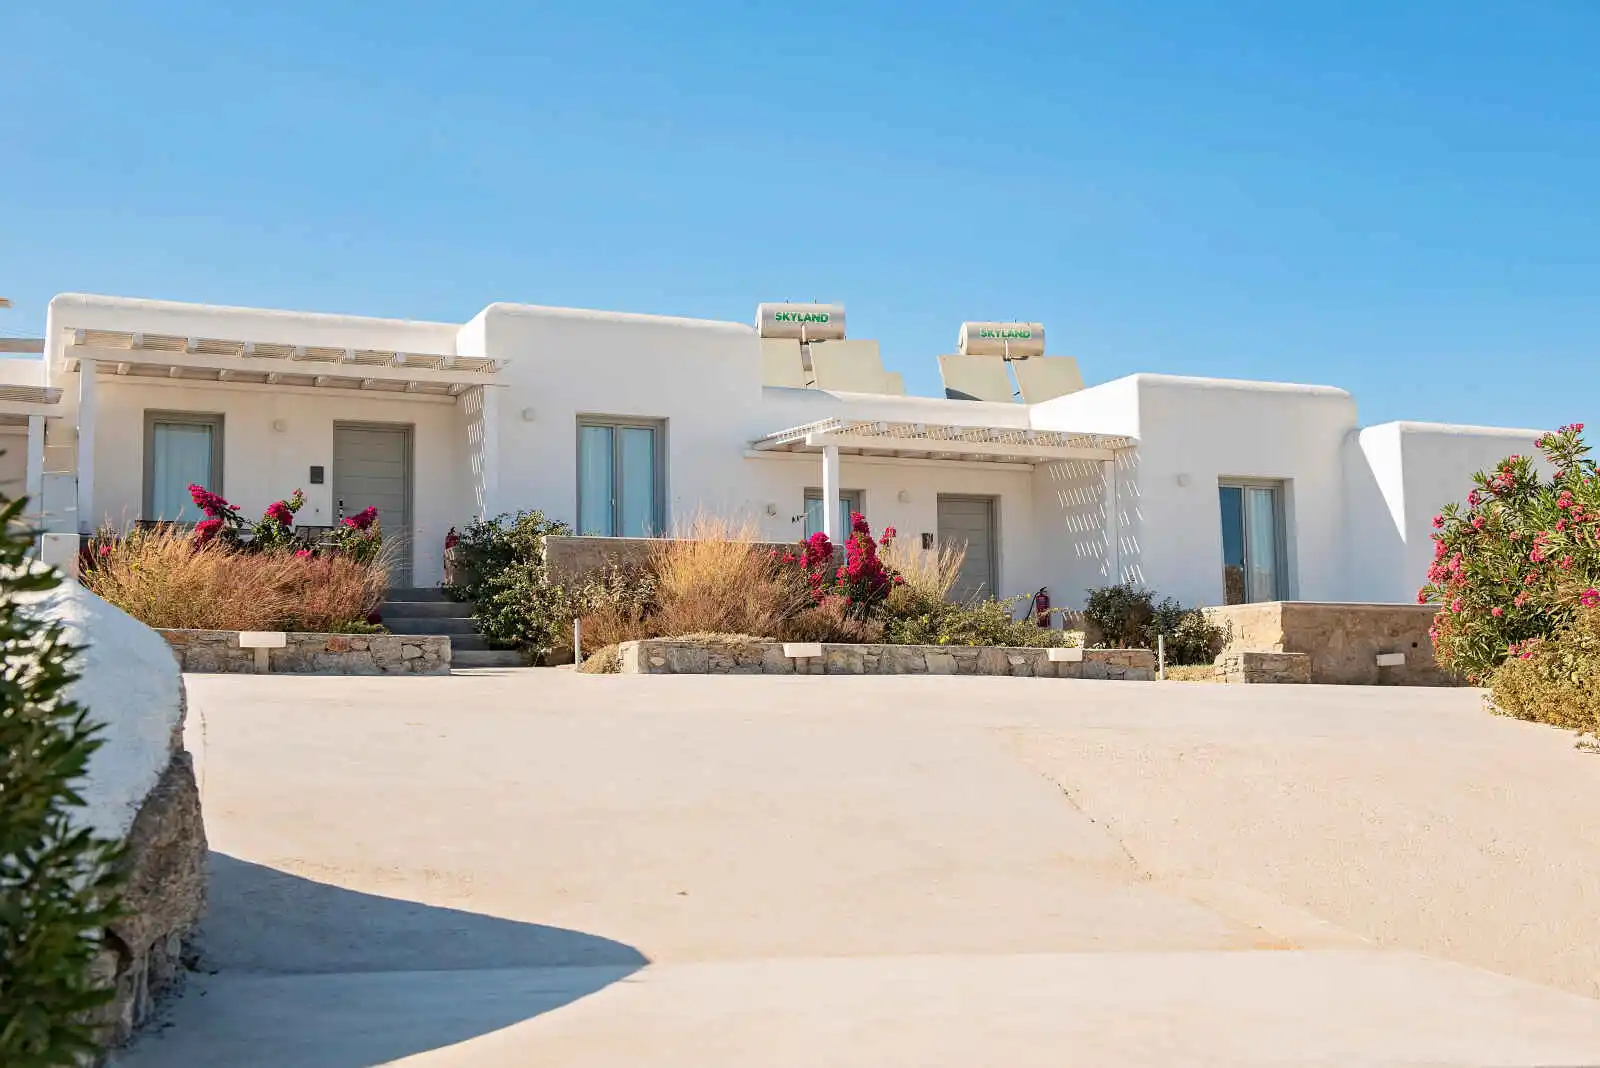 Grèce - Iles grecques - Les Cyclades - Mykonos - Hôtel Osom Resort 4*